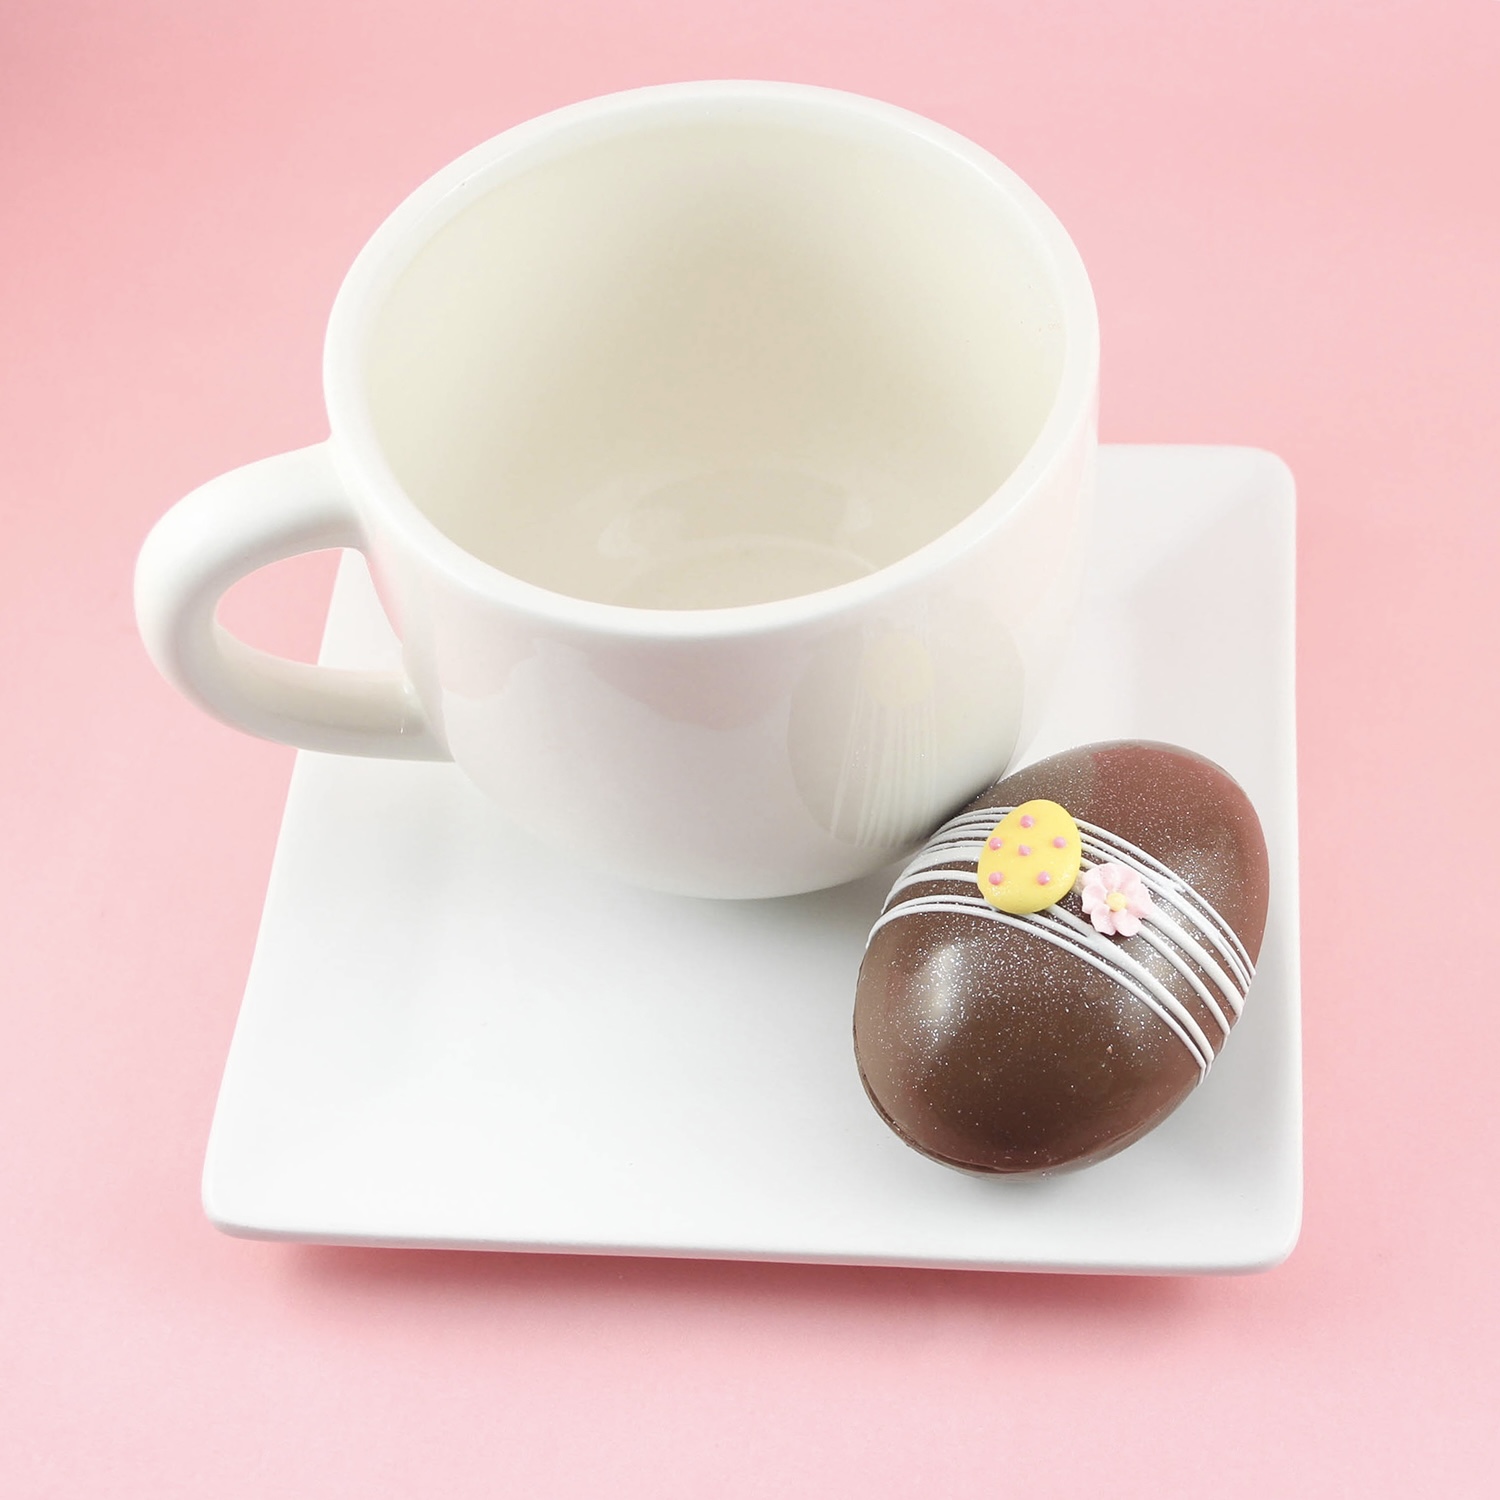 Egg hot chocolate bomb on plate with a mug